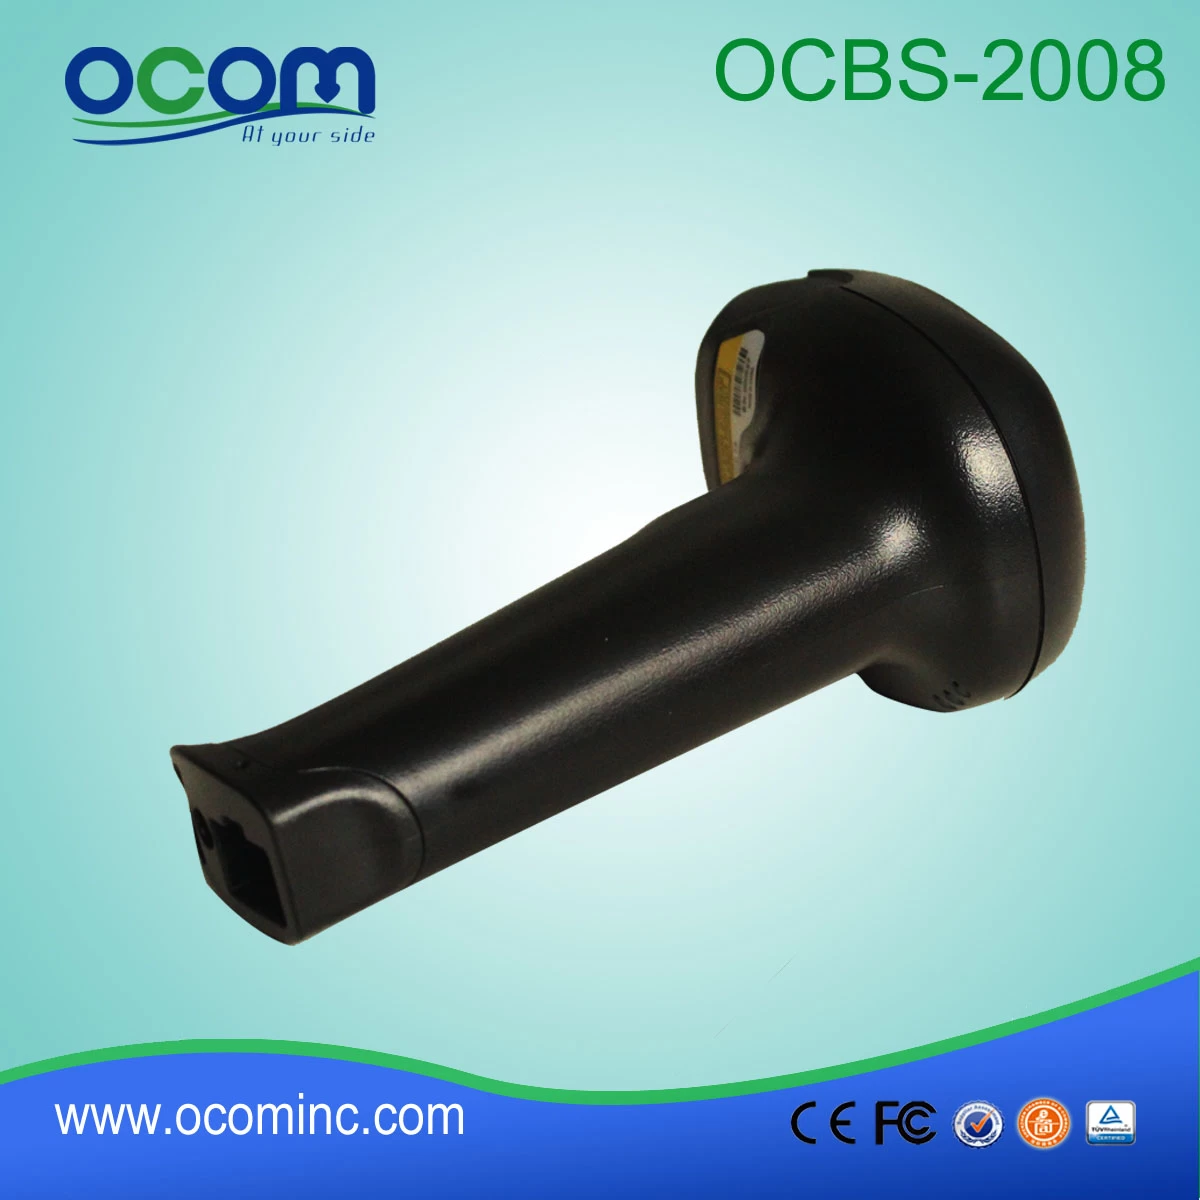 (OCBS-2008) Handheld Barcode Scanner For 1D/2D Barcode